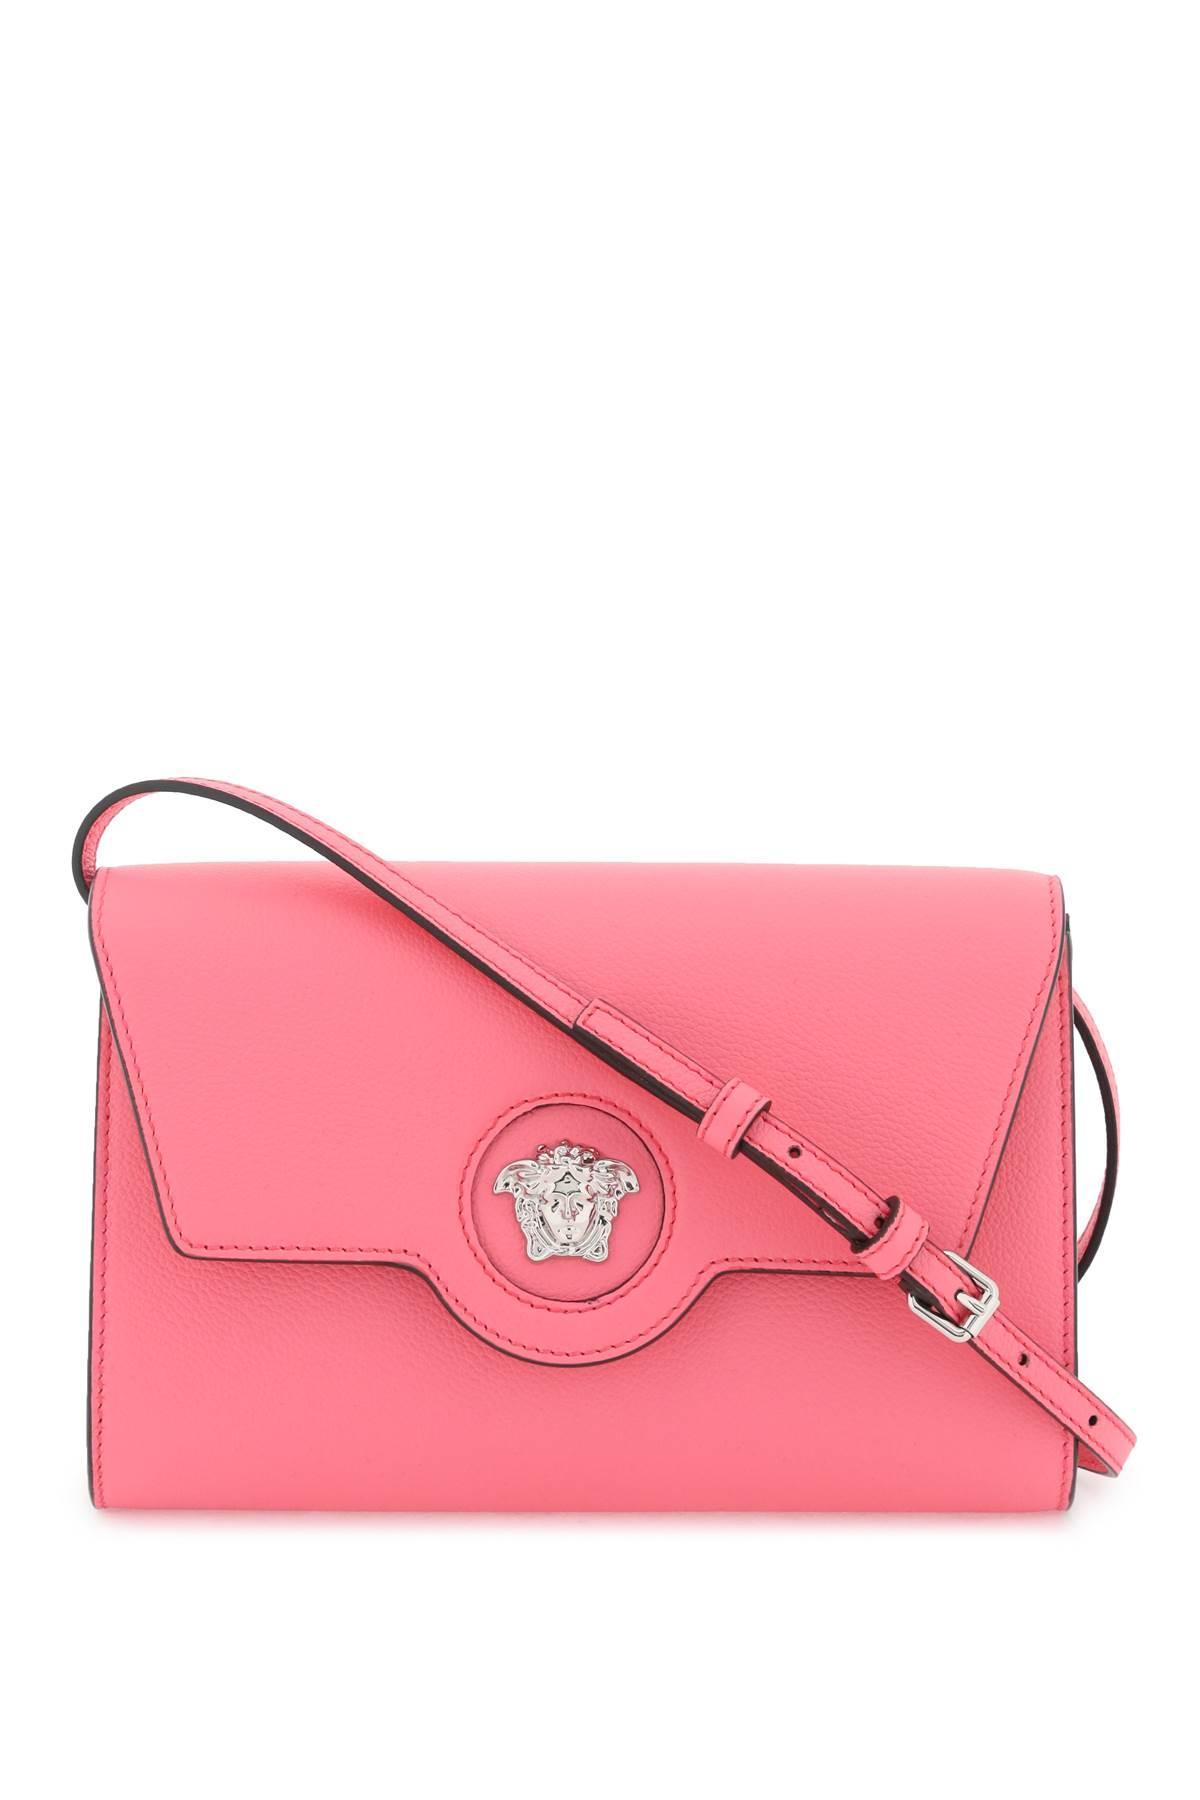 Versace Pink Medusa Wallet - ShopStyle | Versace pink, Bags, Versace bag